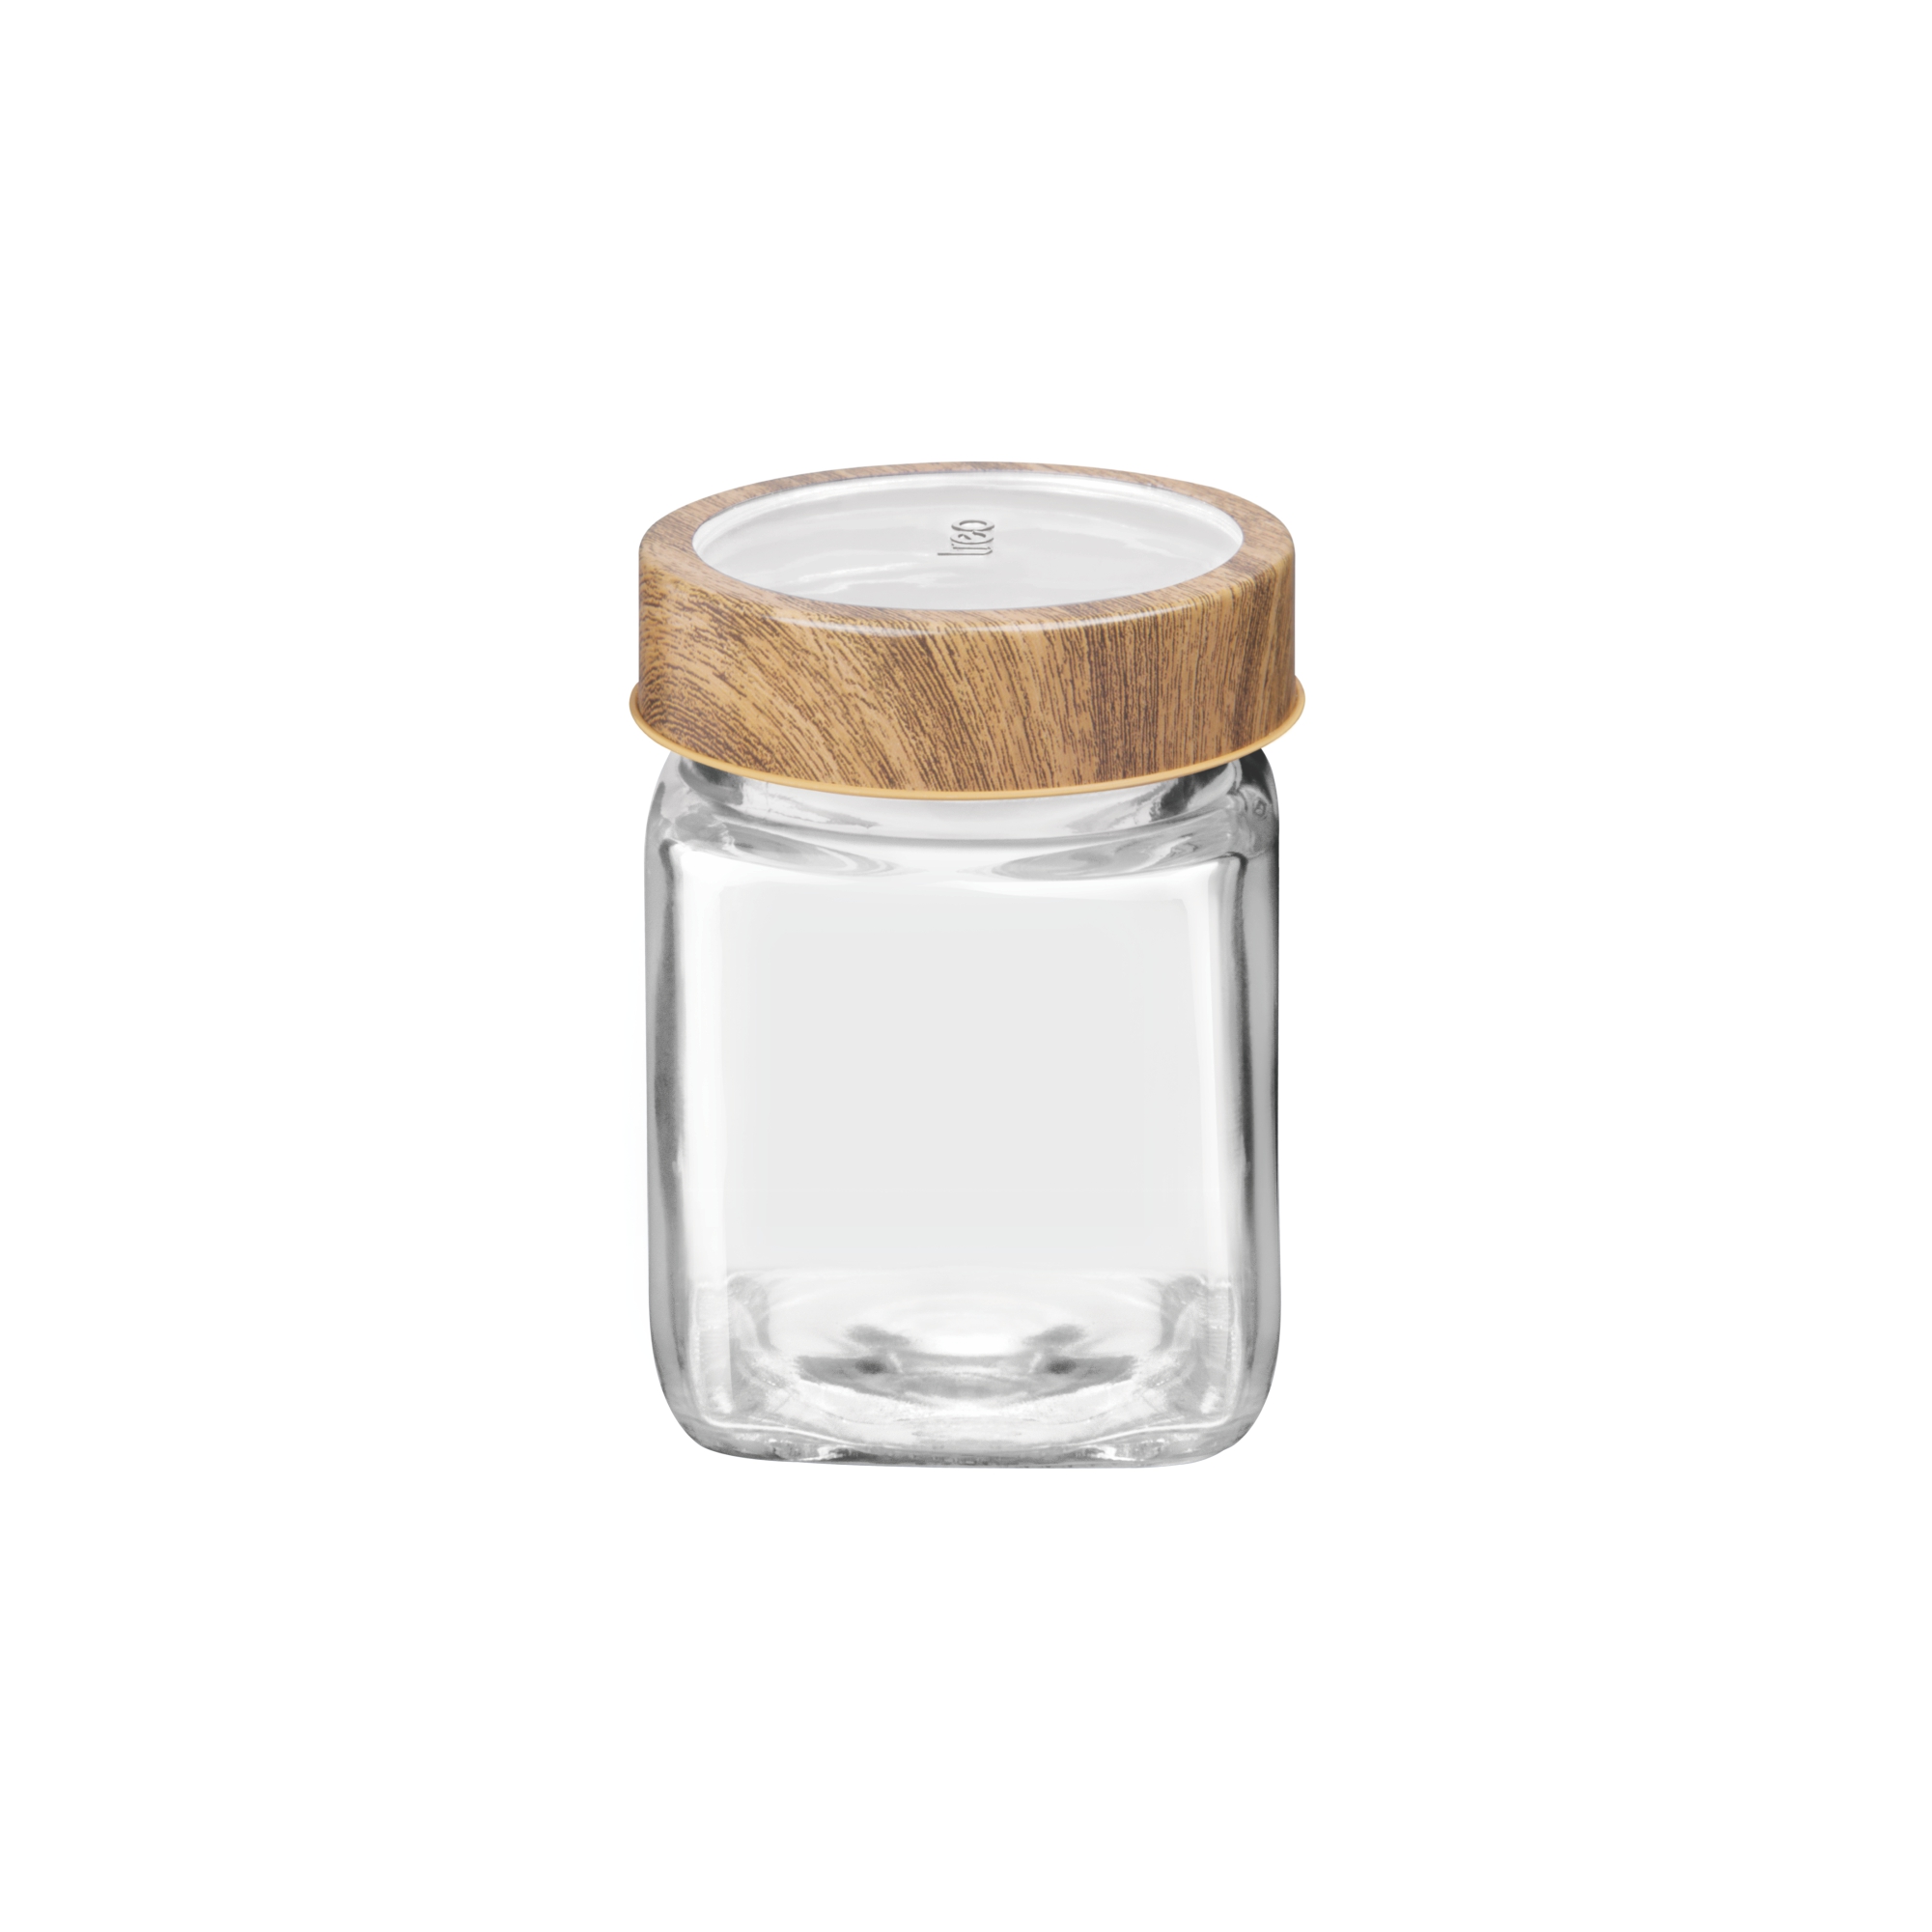 Treo Woody Cube Glass Spice Jar Set